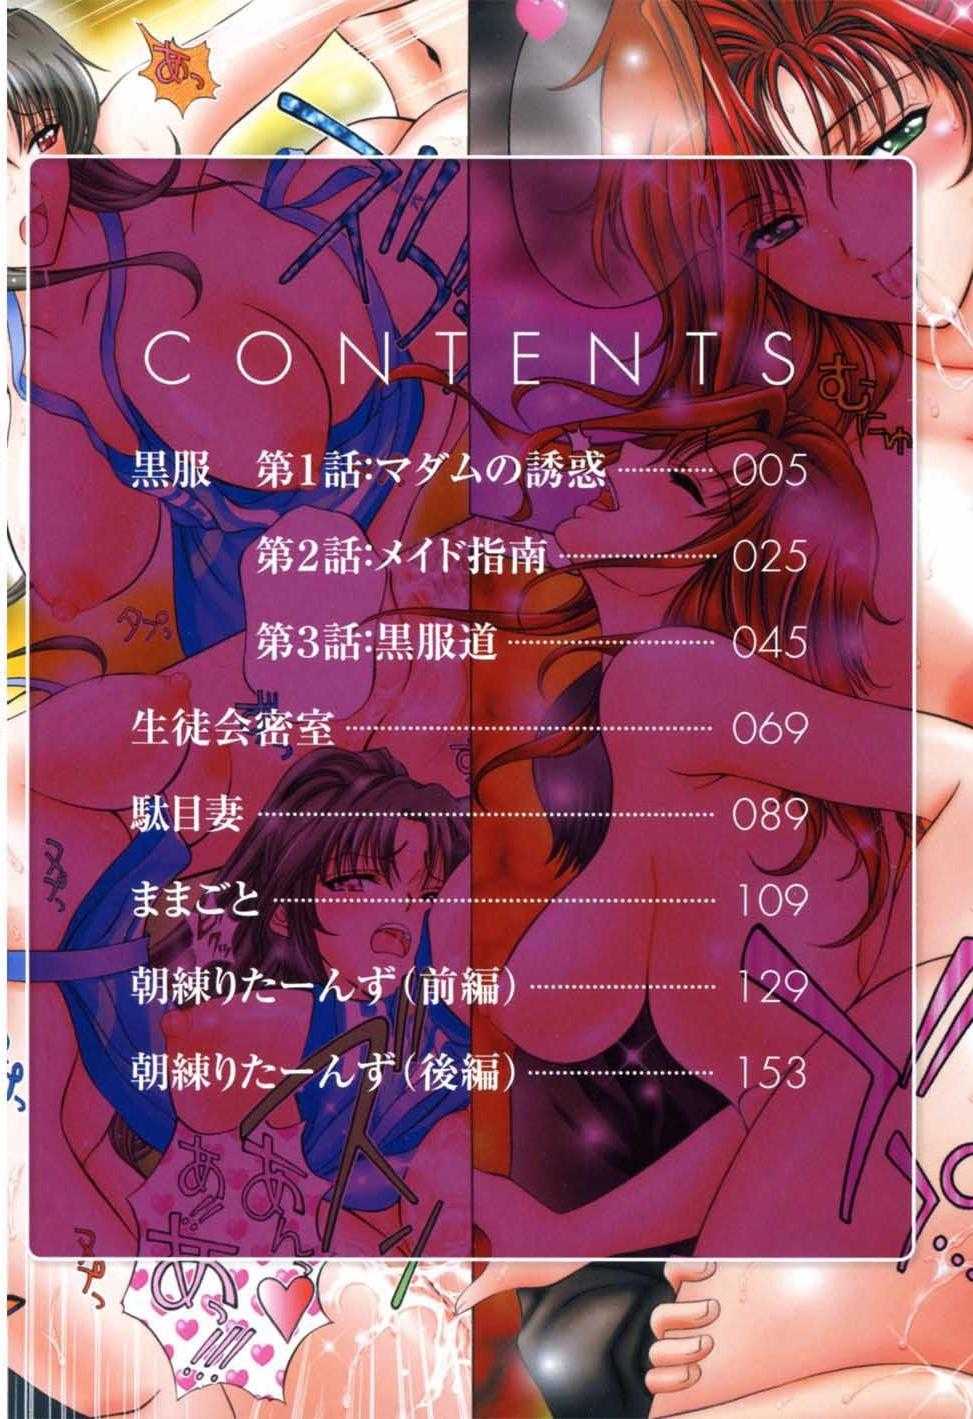 [Asakura Michiru] Hamedere (Single pages reedit 975x1419) 